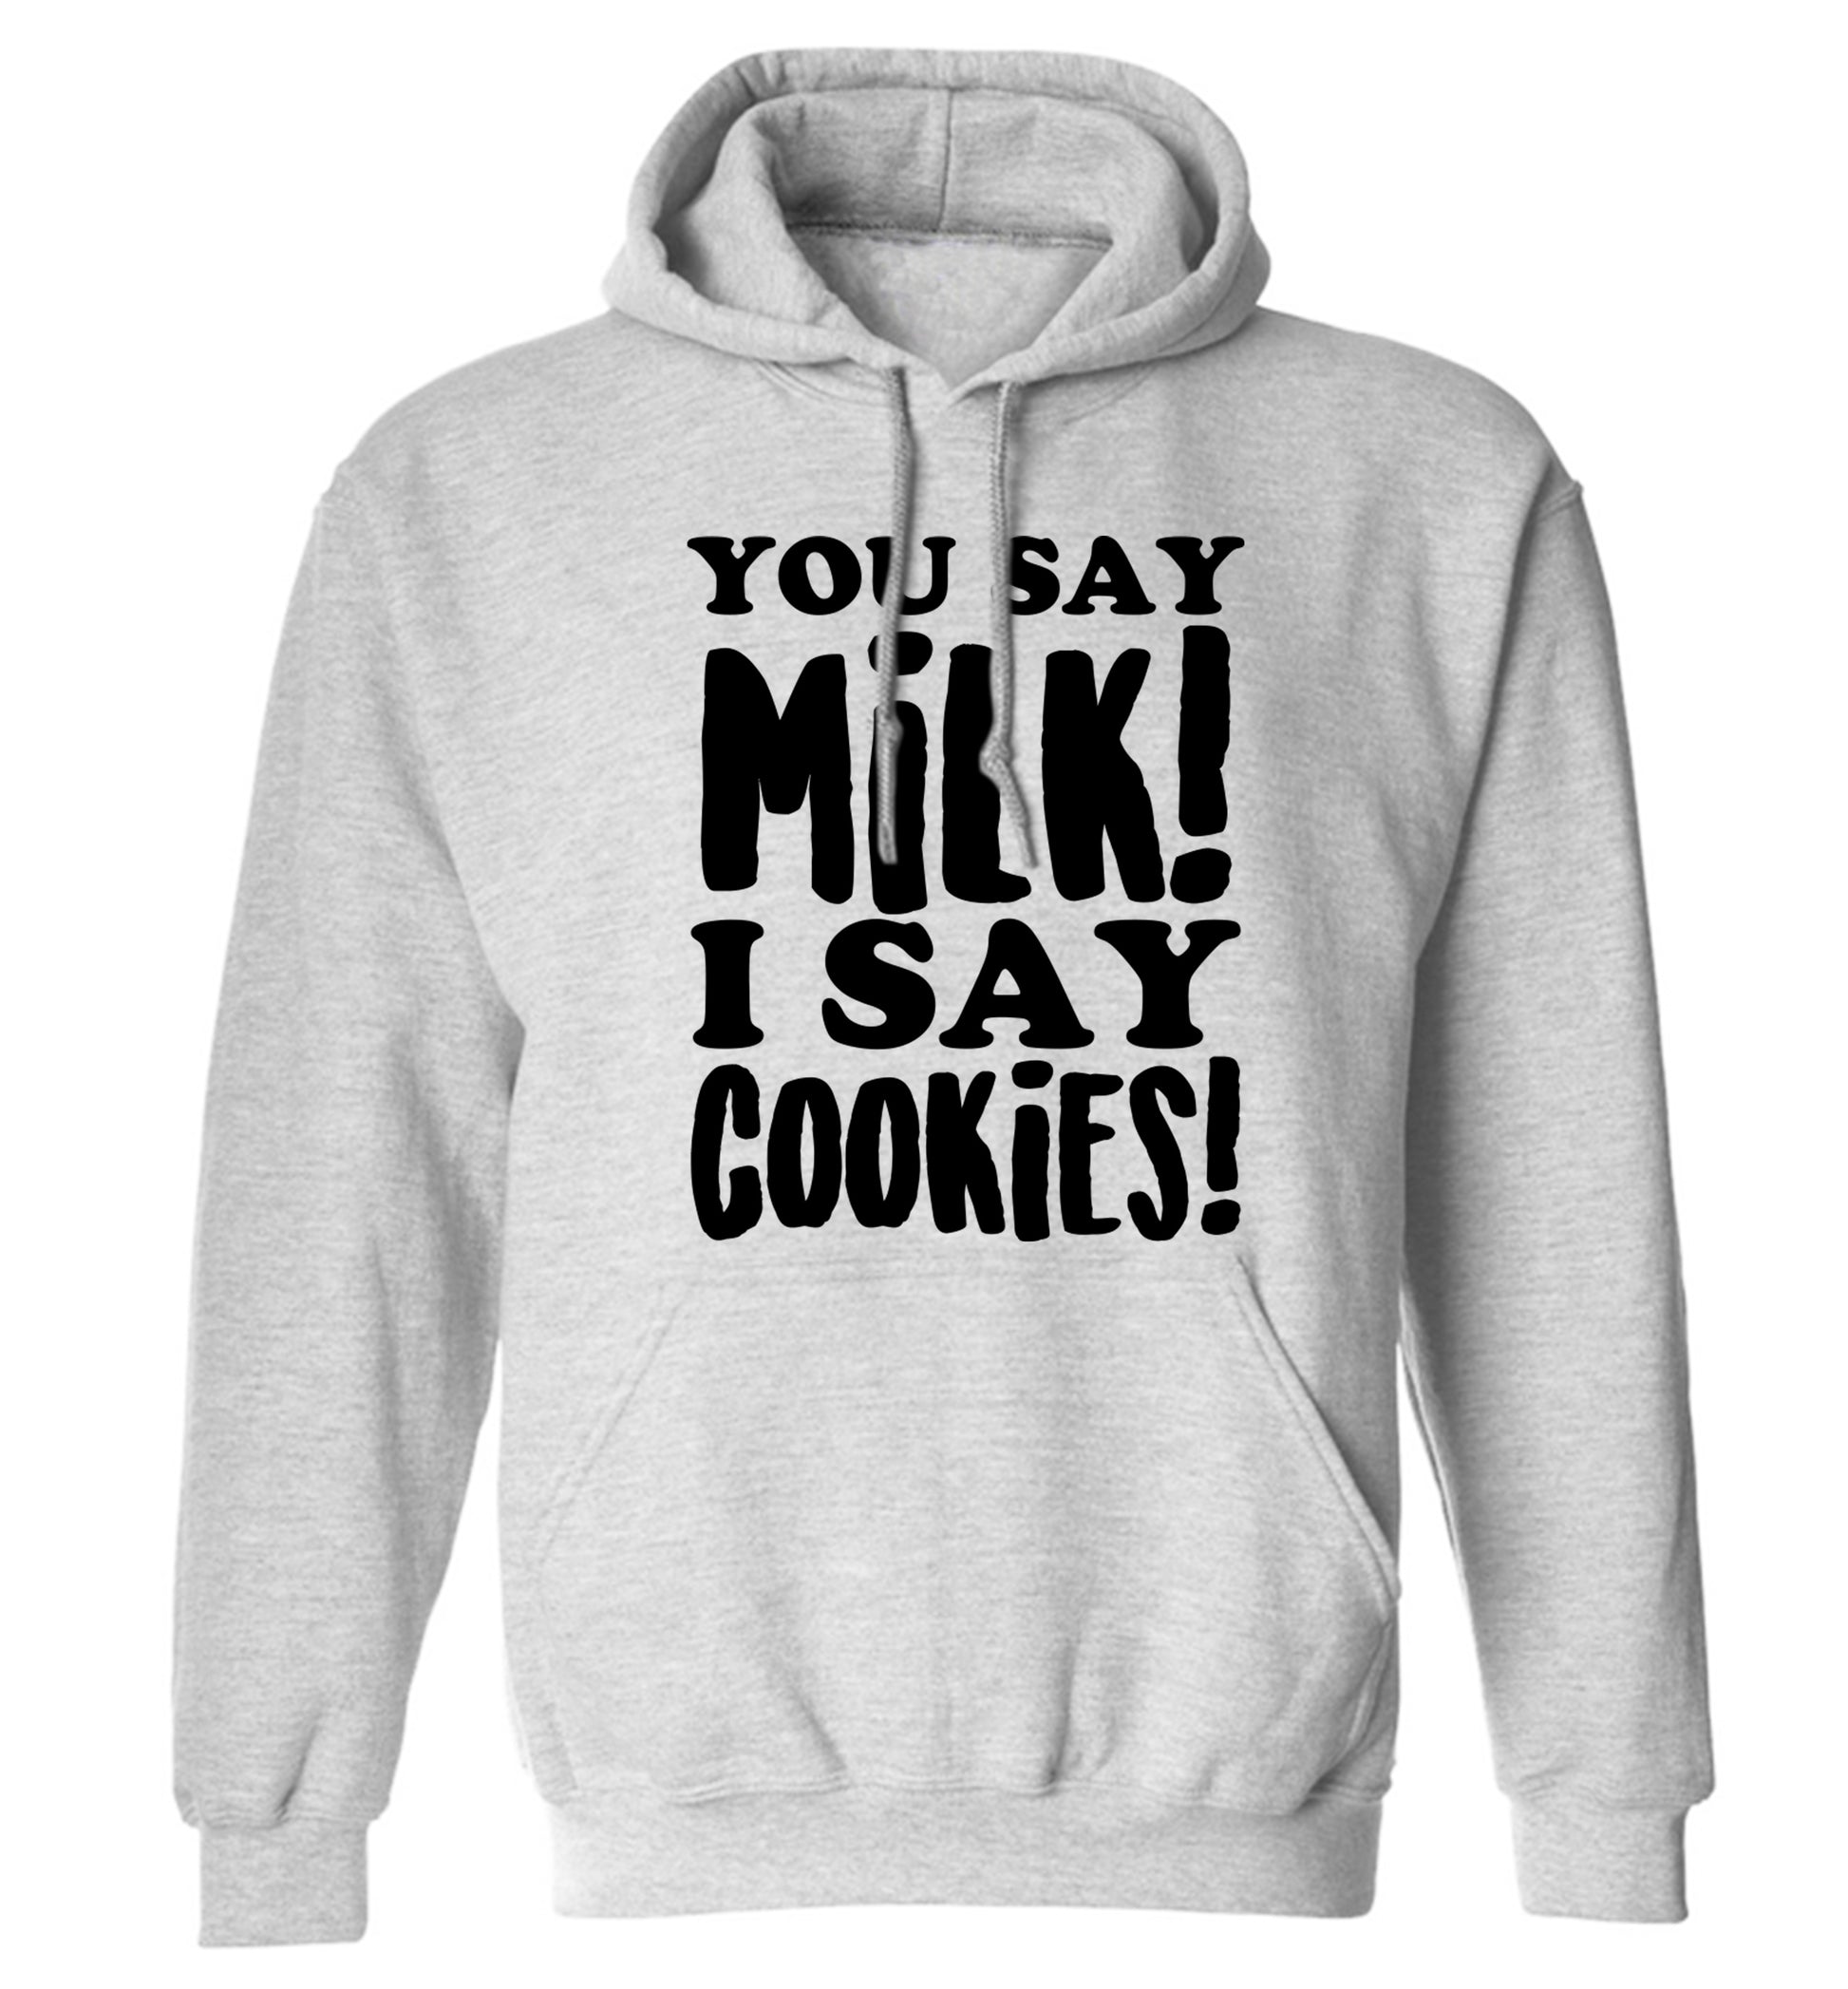 You say milk I say cookies! adults unisex grey hoodie 2XL